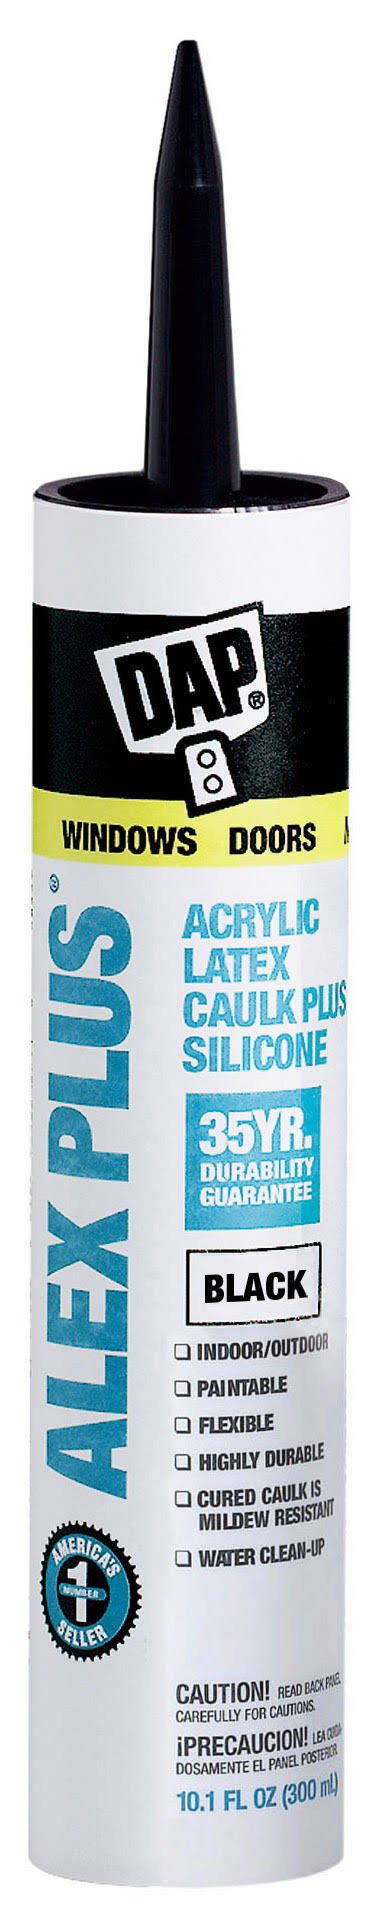 Dap Alex Plus Acrylic Latex Caulk with Silicone - Black, 299ml